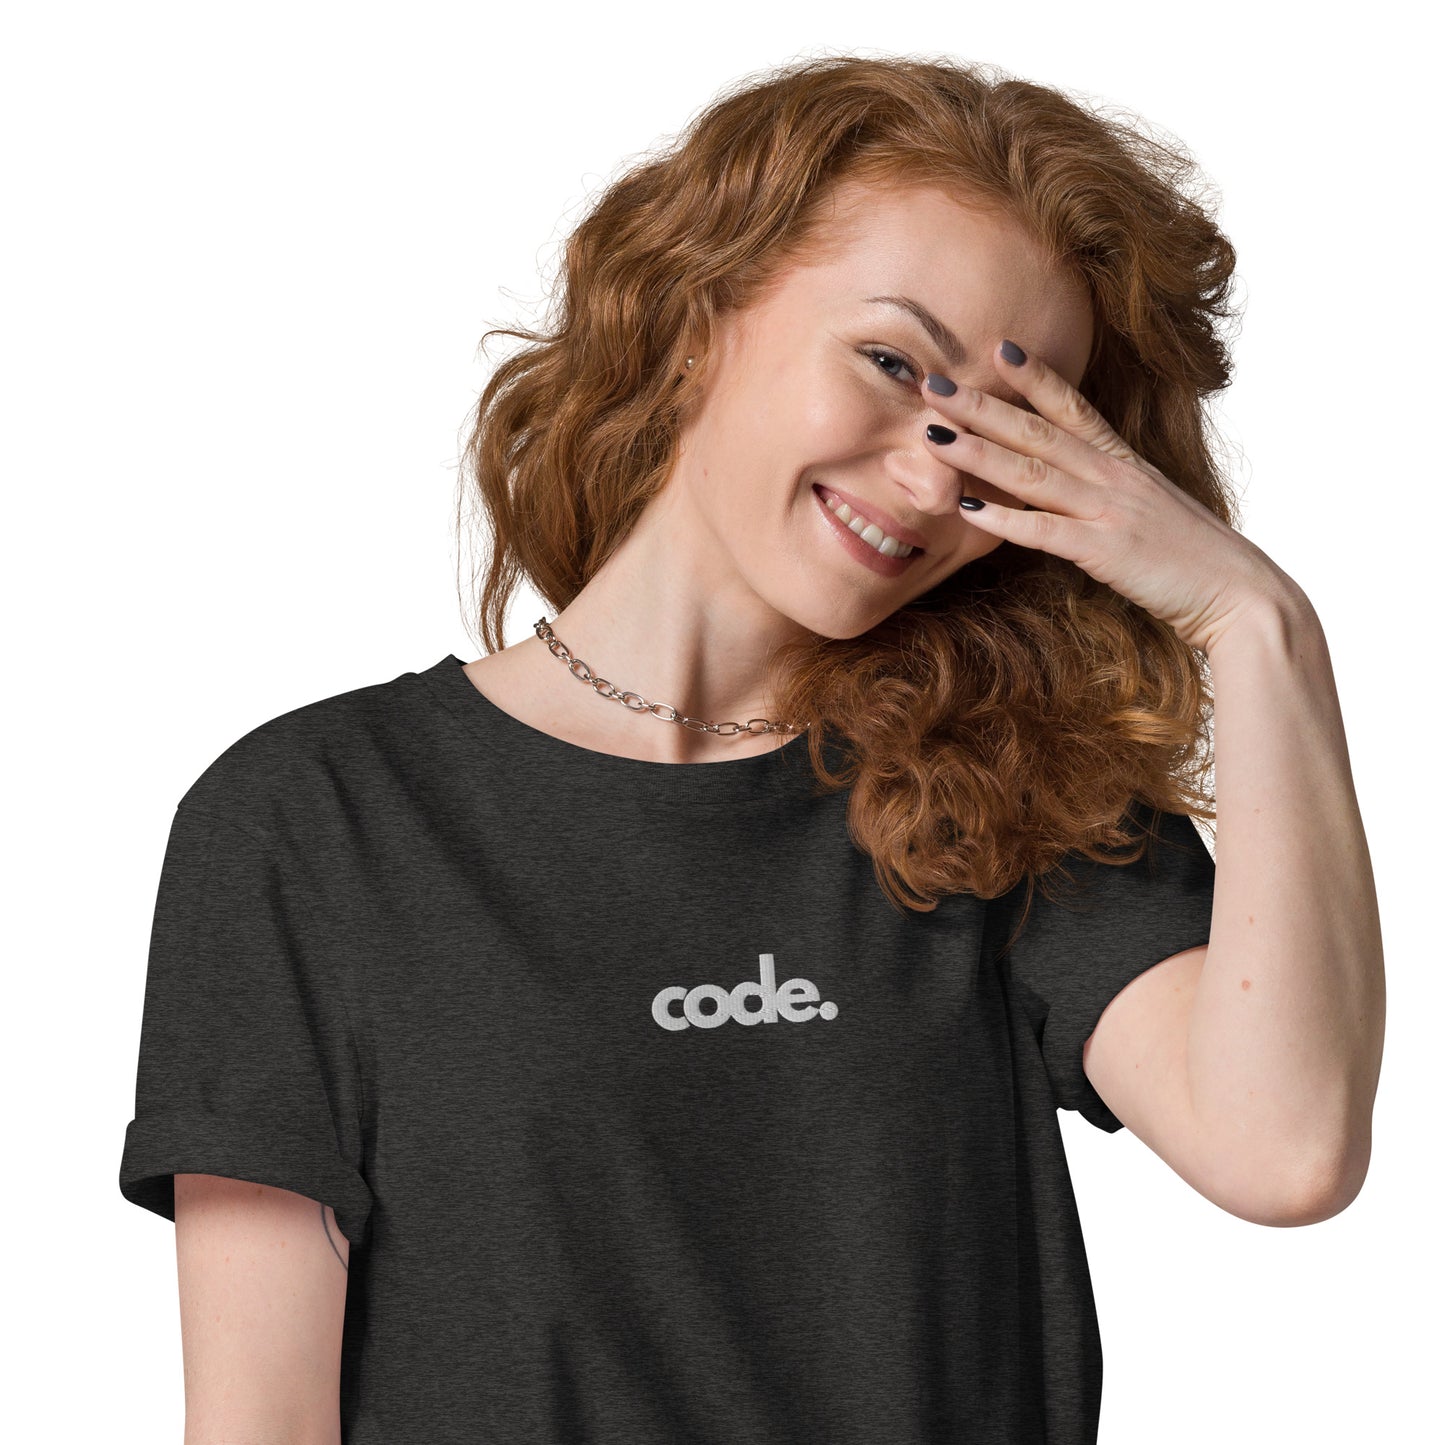 "CODE" Unisex organic cotton dark t-shirt (embroidered) The Developer Shop